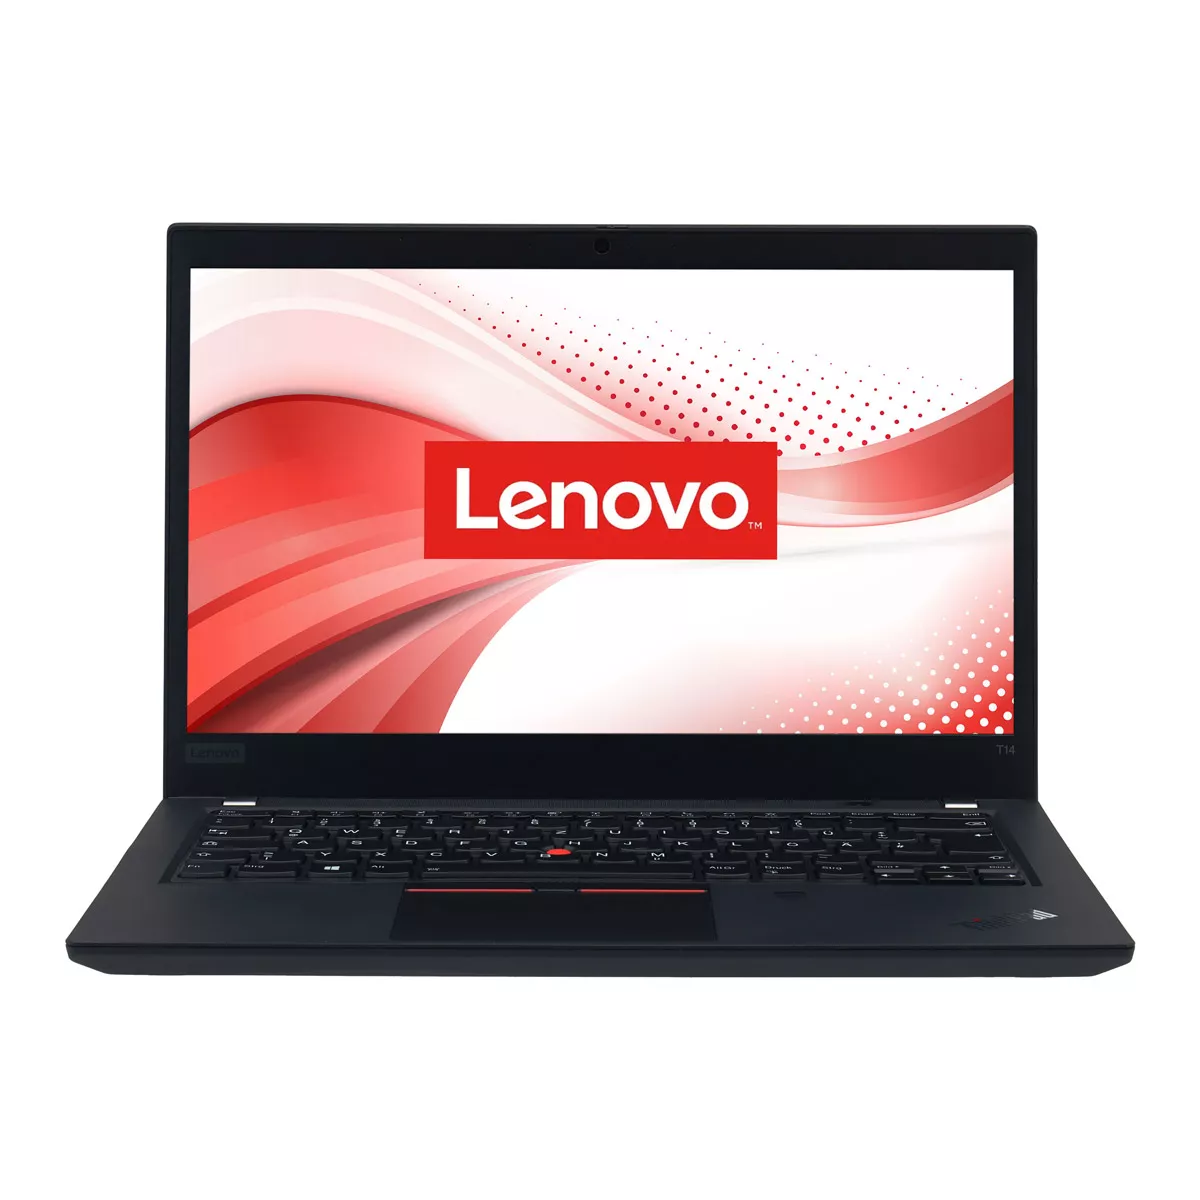 Lenovo ThinkPad T14 G1 Core i7 10510U Full-HD 16 GB 500 GB M.2 nVME SSD Touch Webcam A